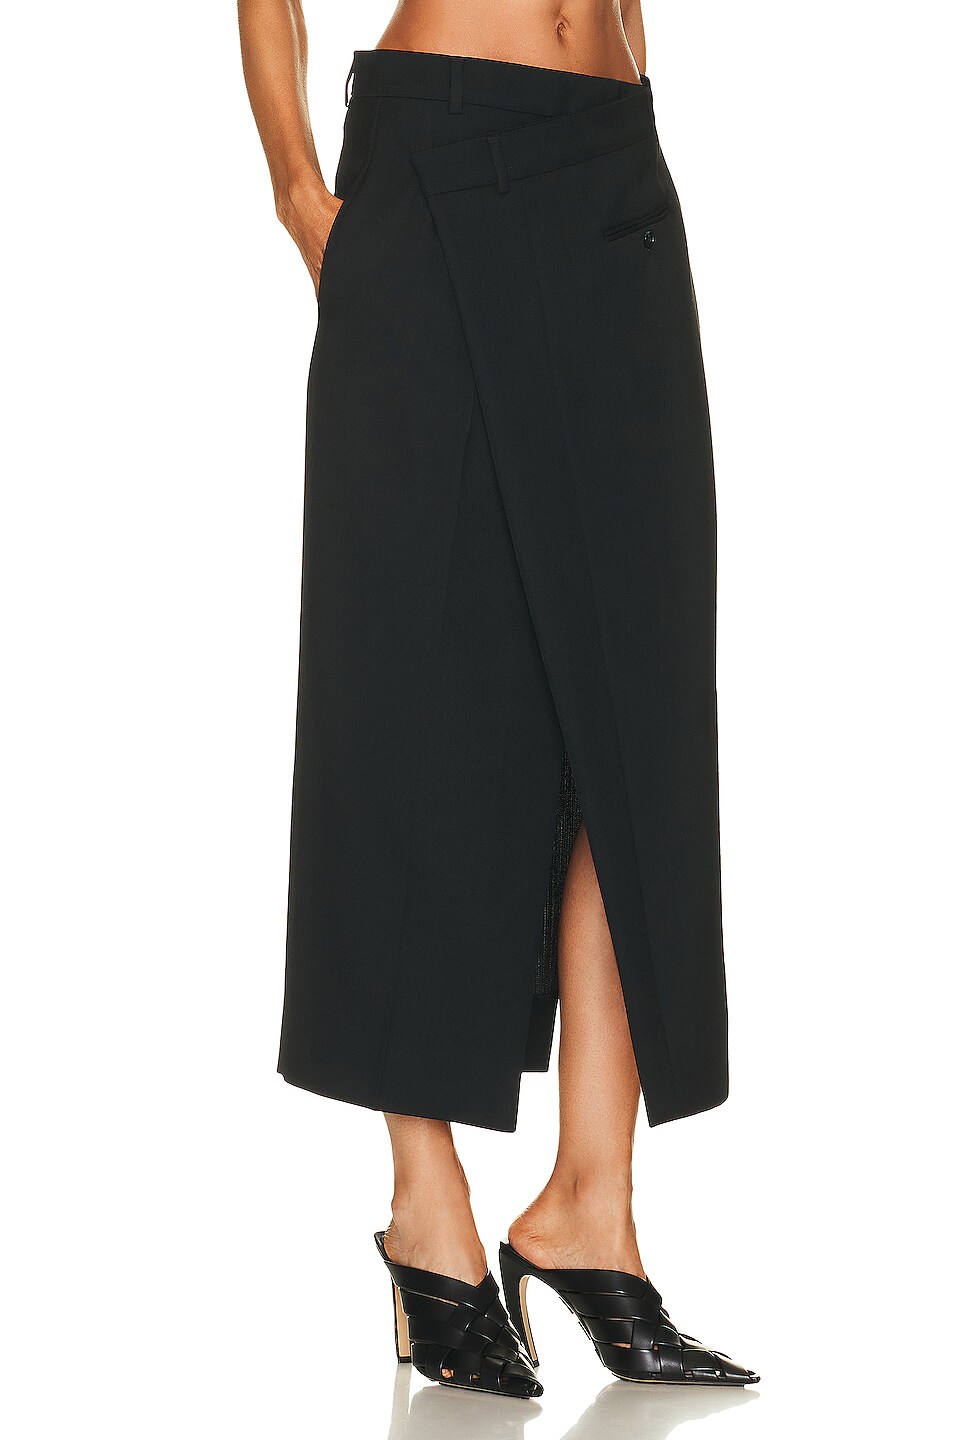 Acne Studios Slit Maxi Skirt in Black | FWRD